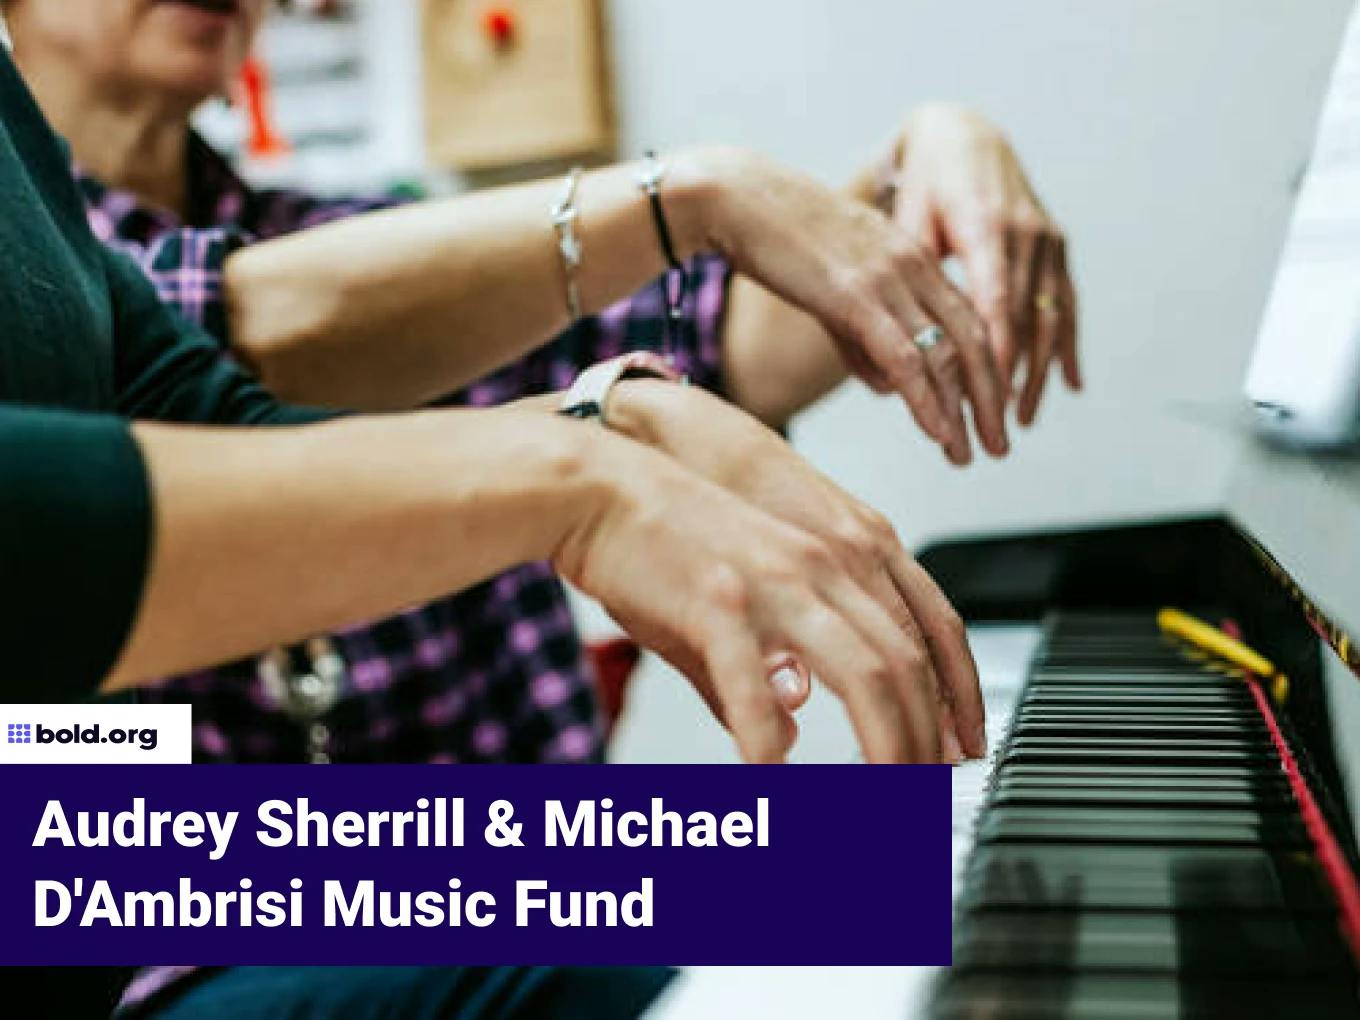 Audrey Sherrill & Michael D'Ambrisi Music Fund